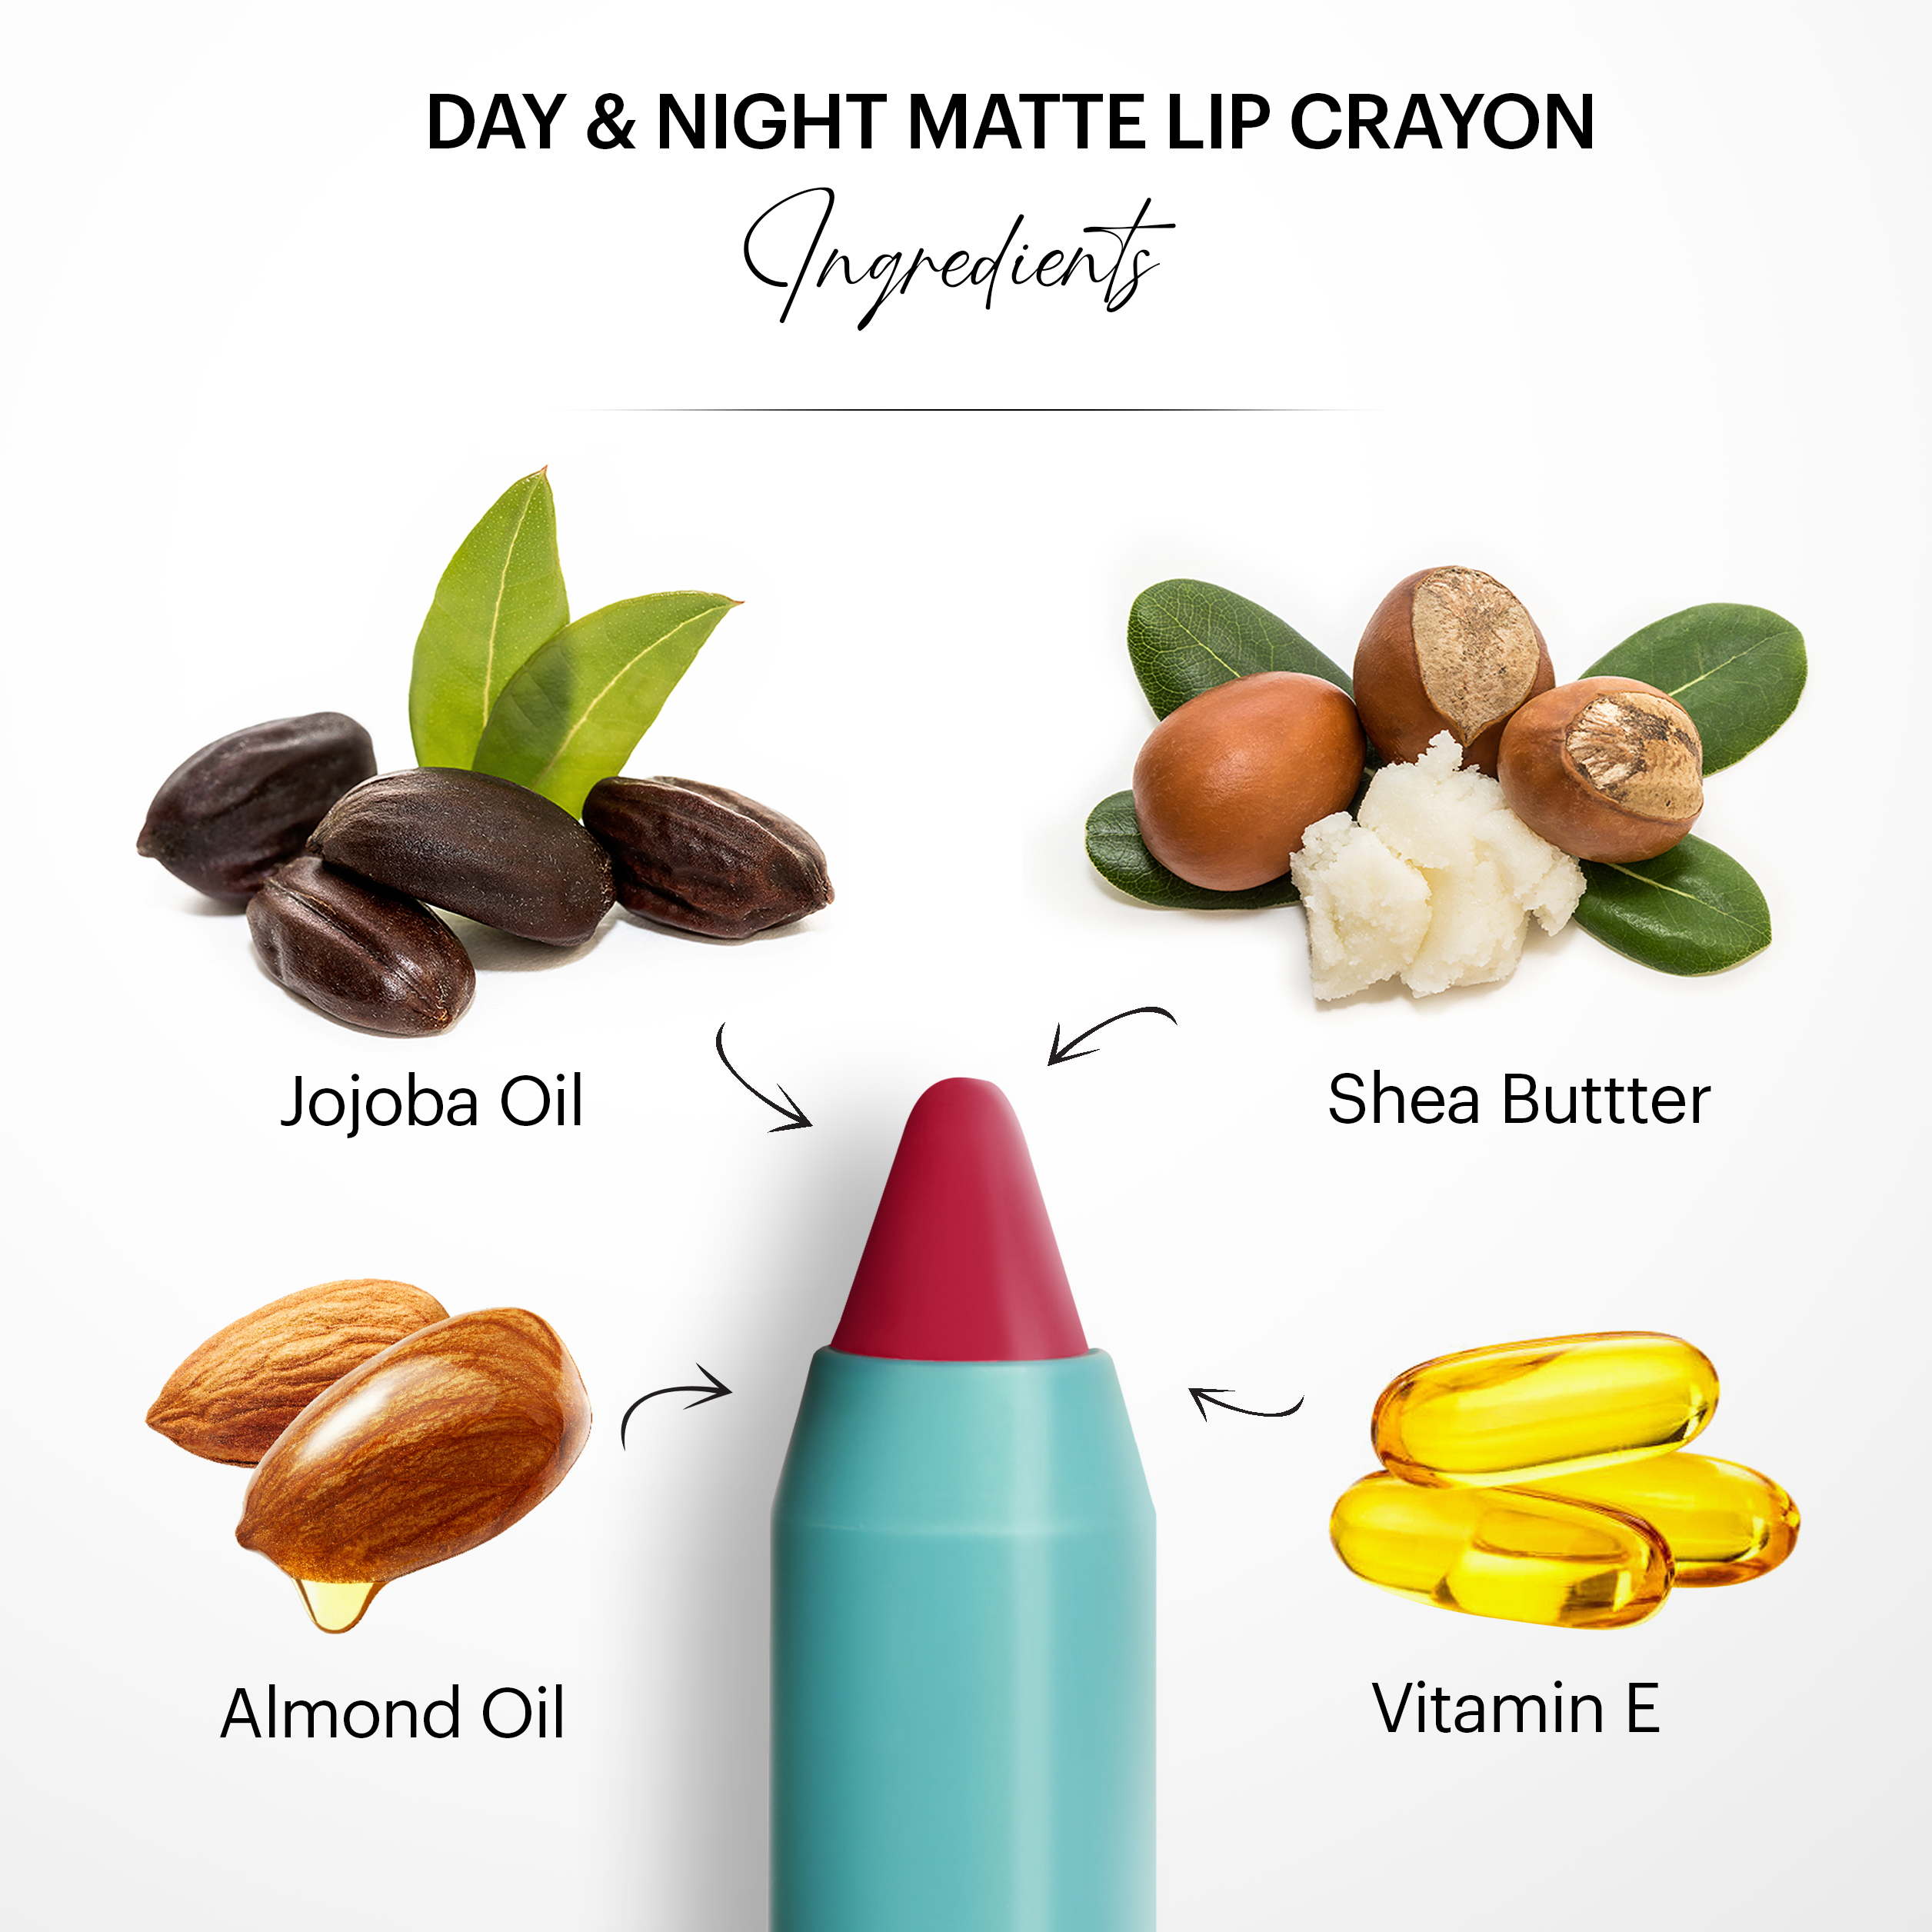 Day & Night Matte Lip Crayon Shade: Influencer 89